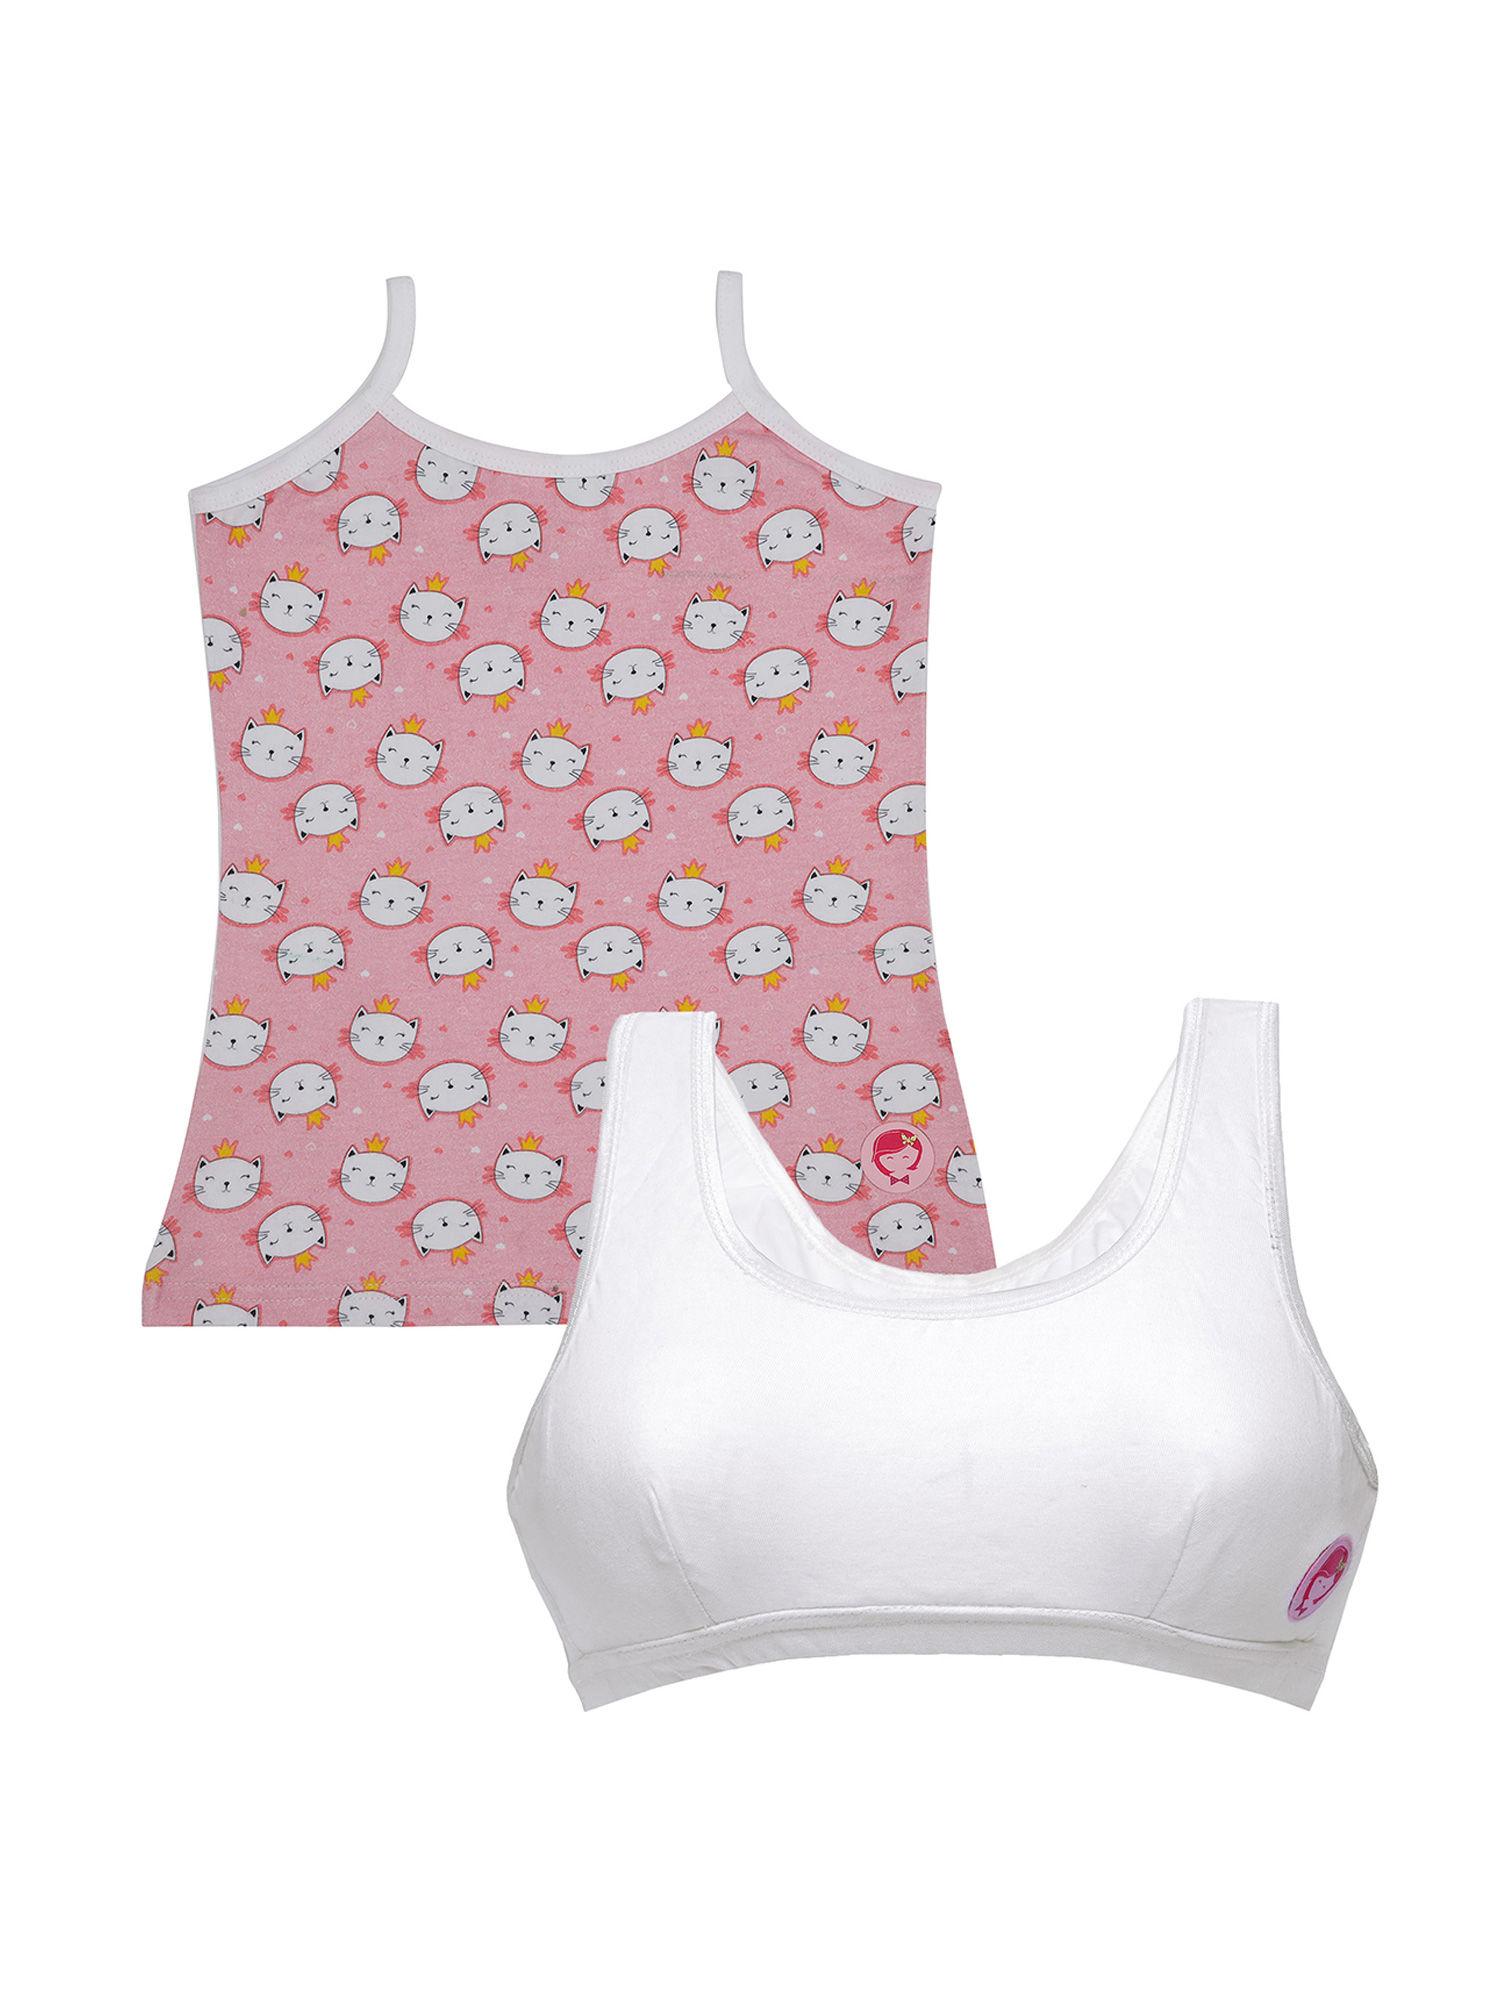 pack of 2 white beginner bra and cat print camisole-slip for girls